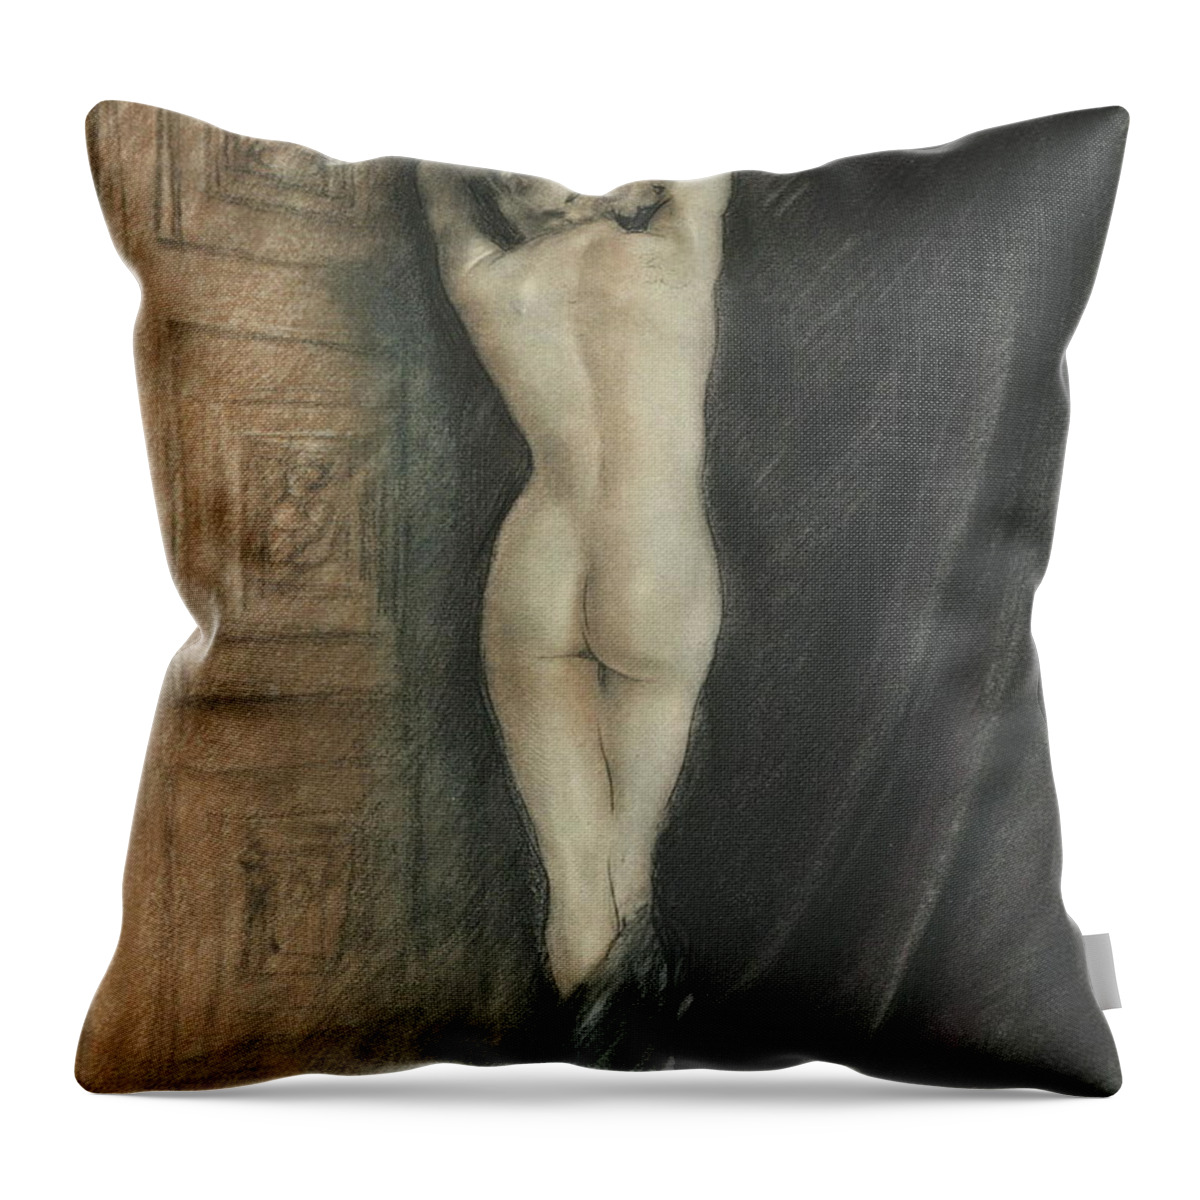 Edouard Chimot Throw Pillow featuring the photograph Edouard Chimot Nude in Boudoir by Andrea Kollo